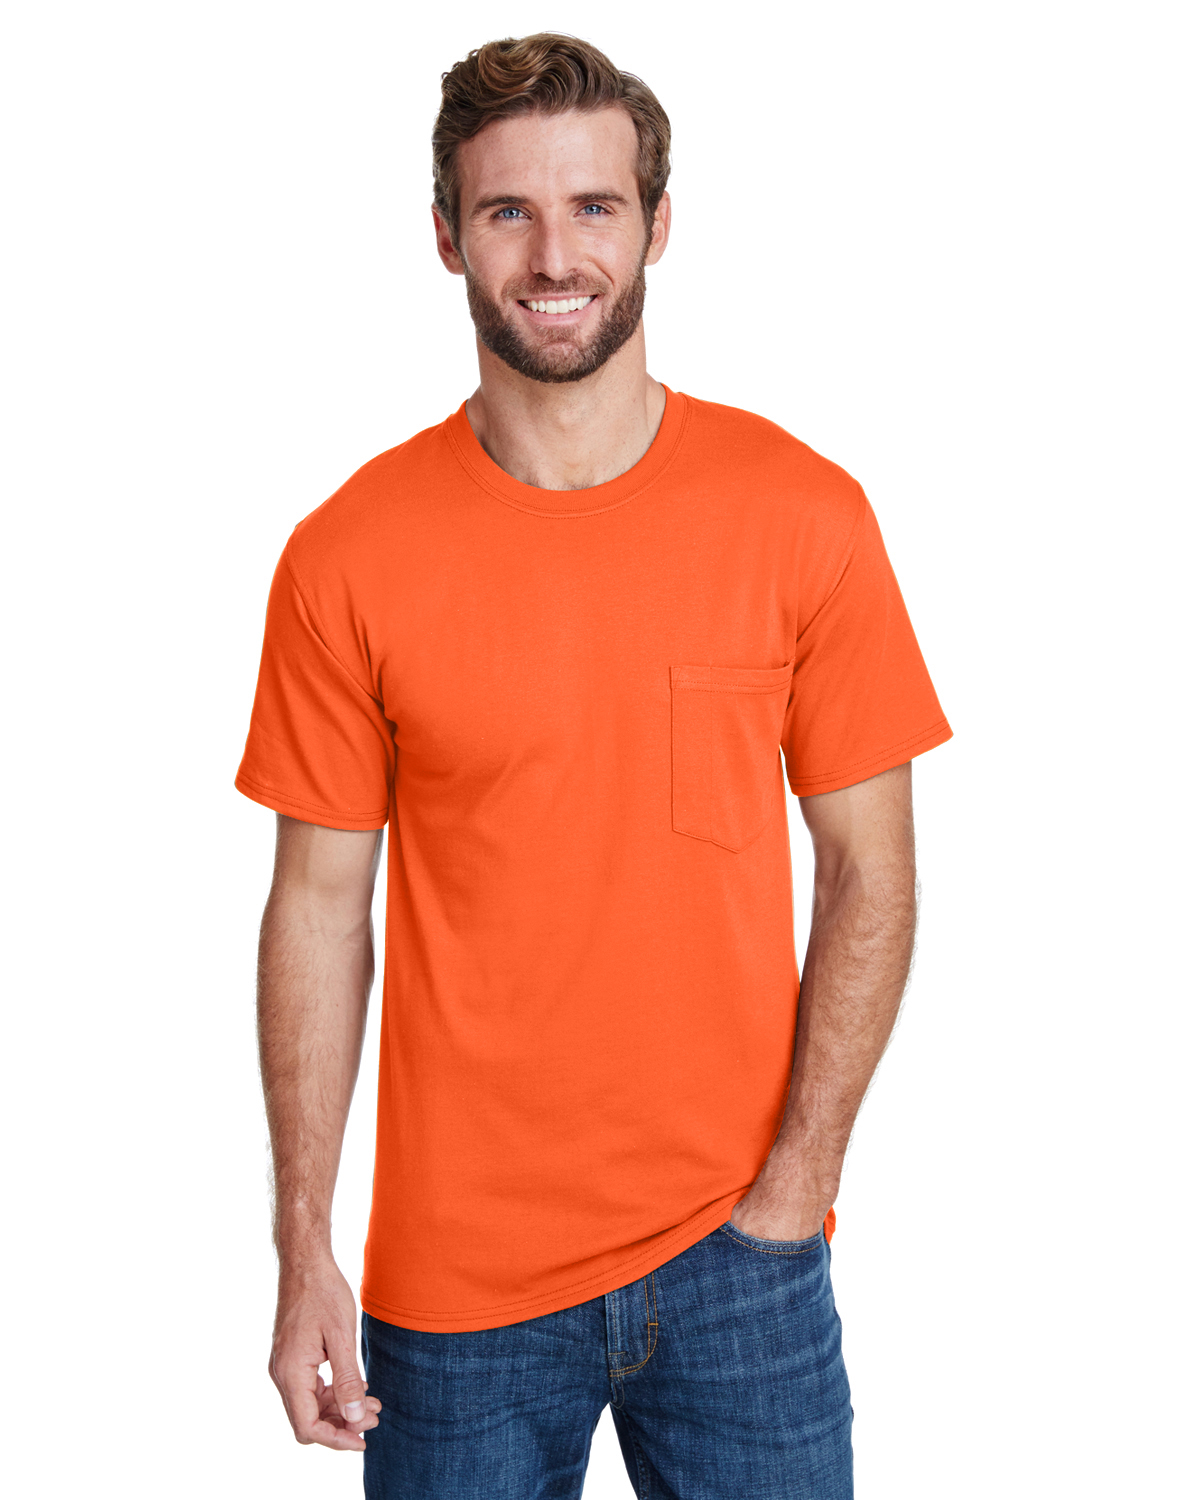 W110    Hanes Adult Workwear Pocket T-Shirt